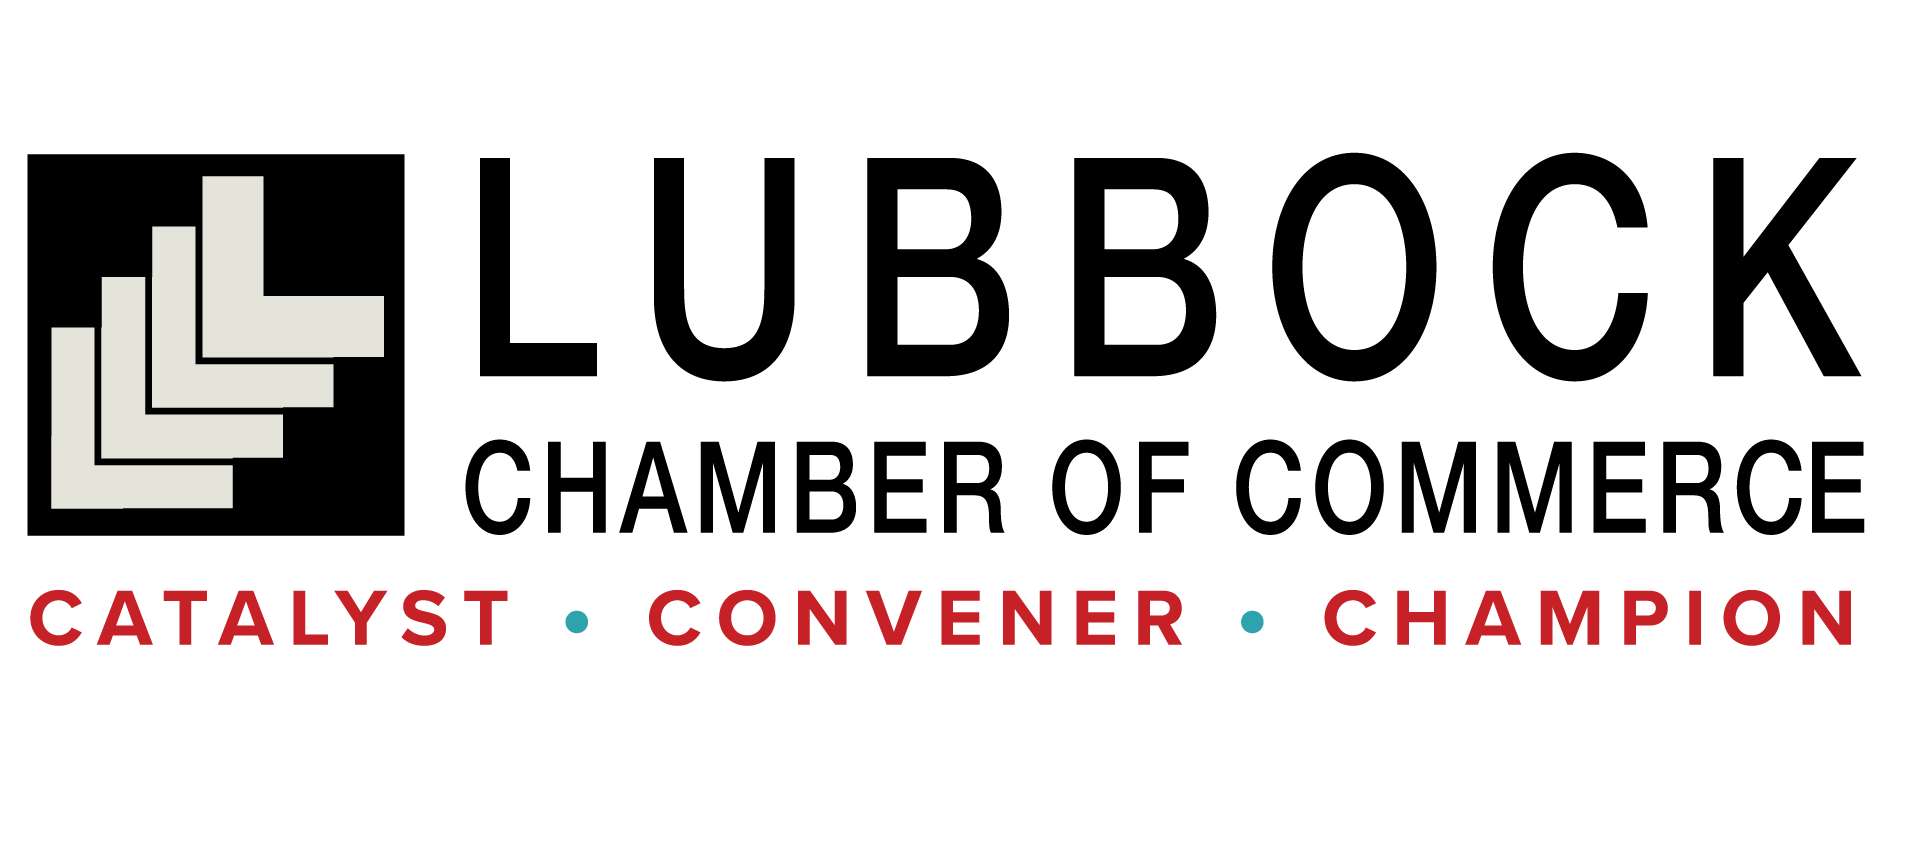 Lubbock Logo - Lubbock Chamber Home - Lubbock Chamber of Commerce, TX